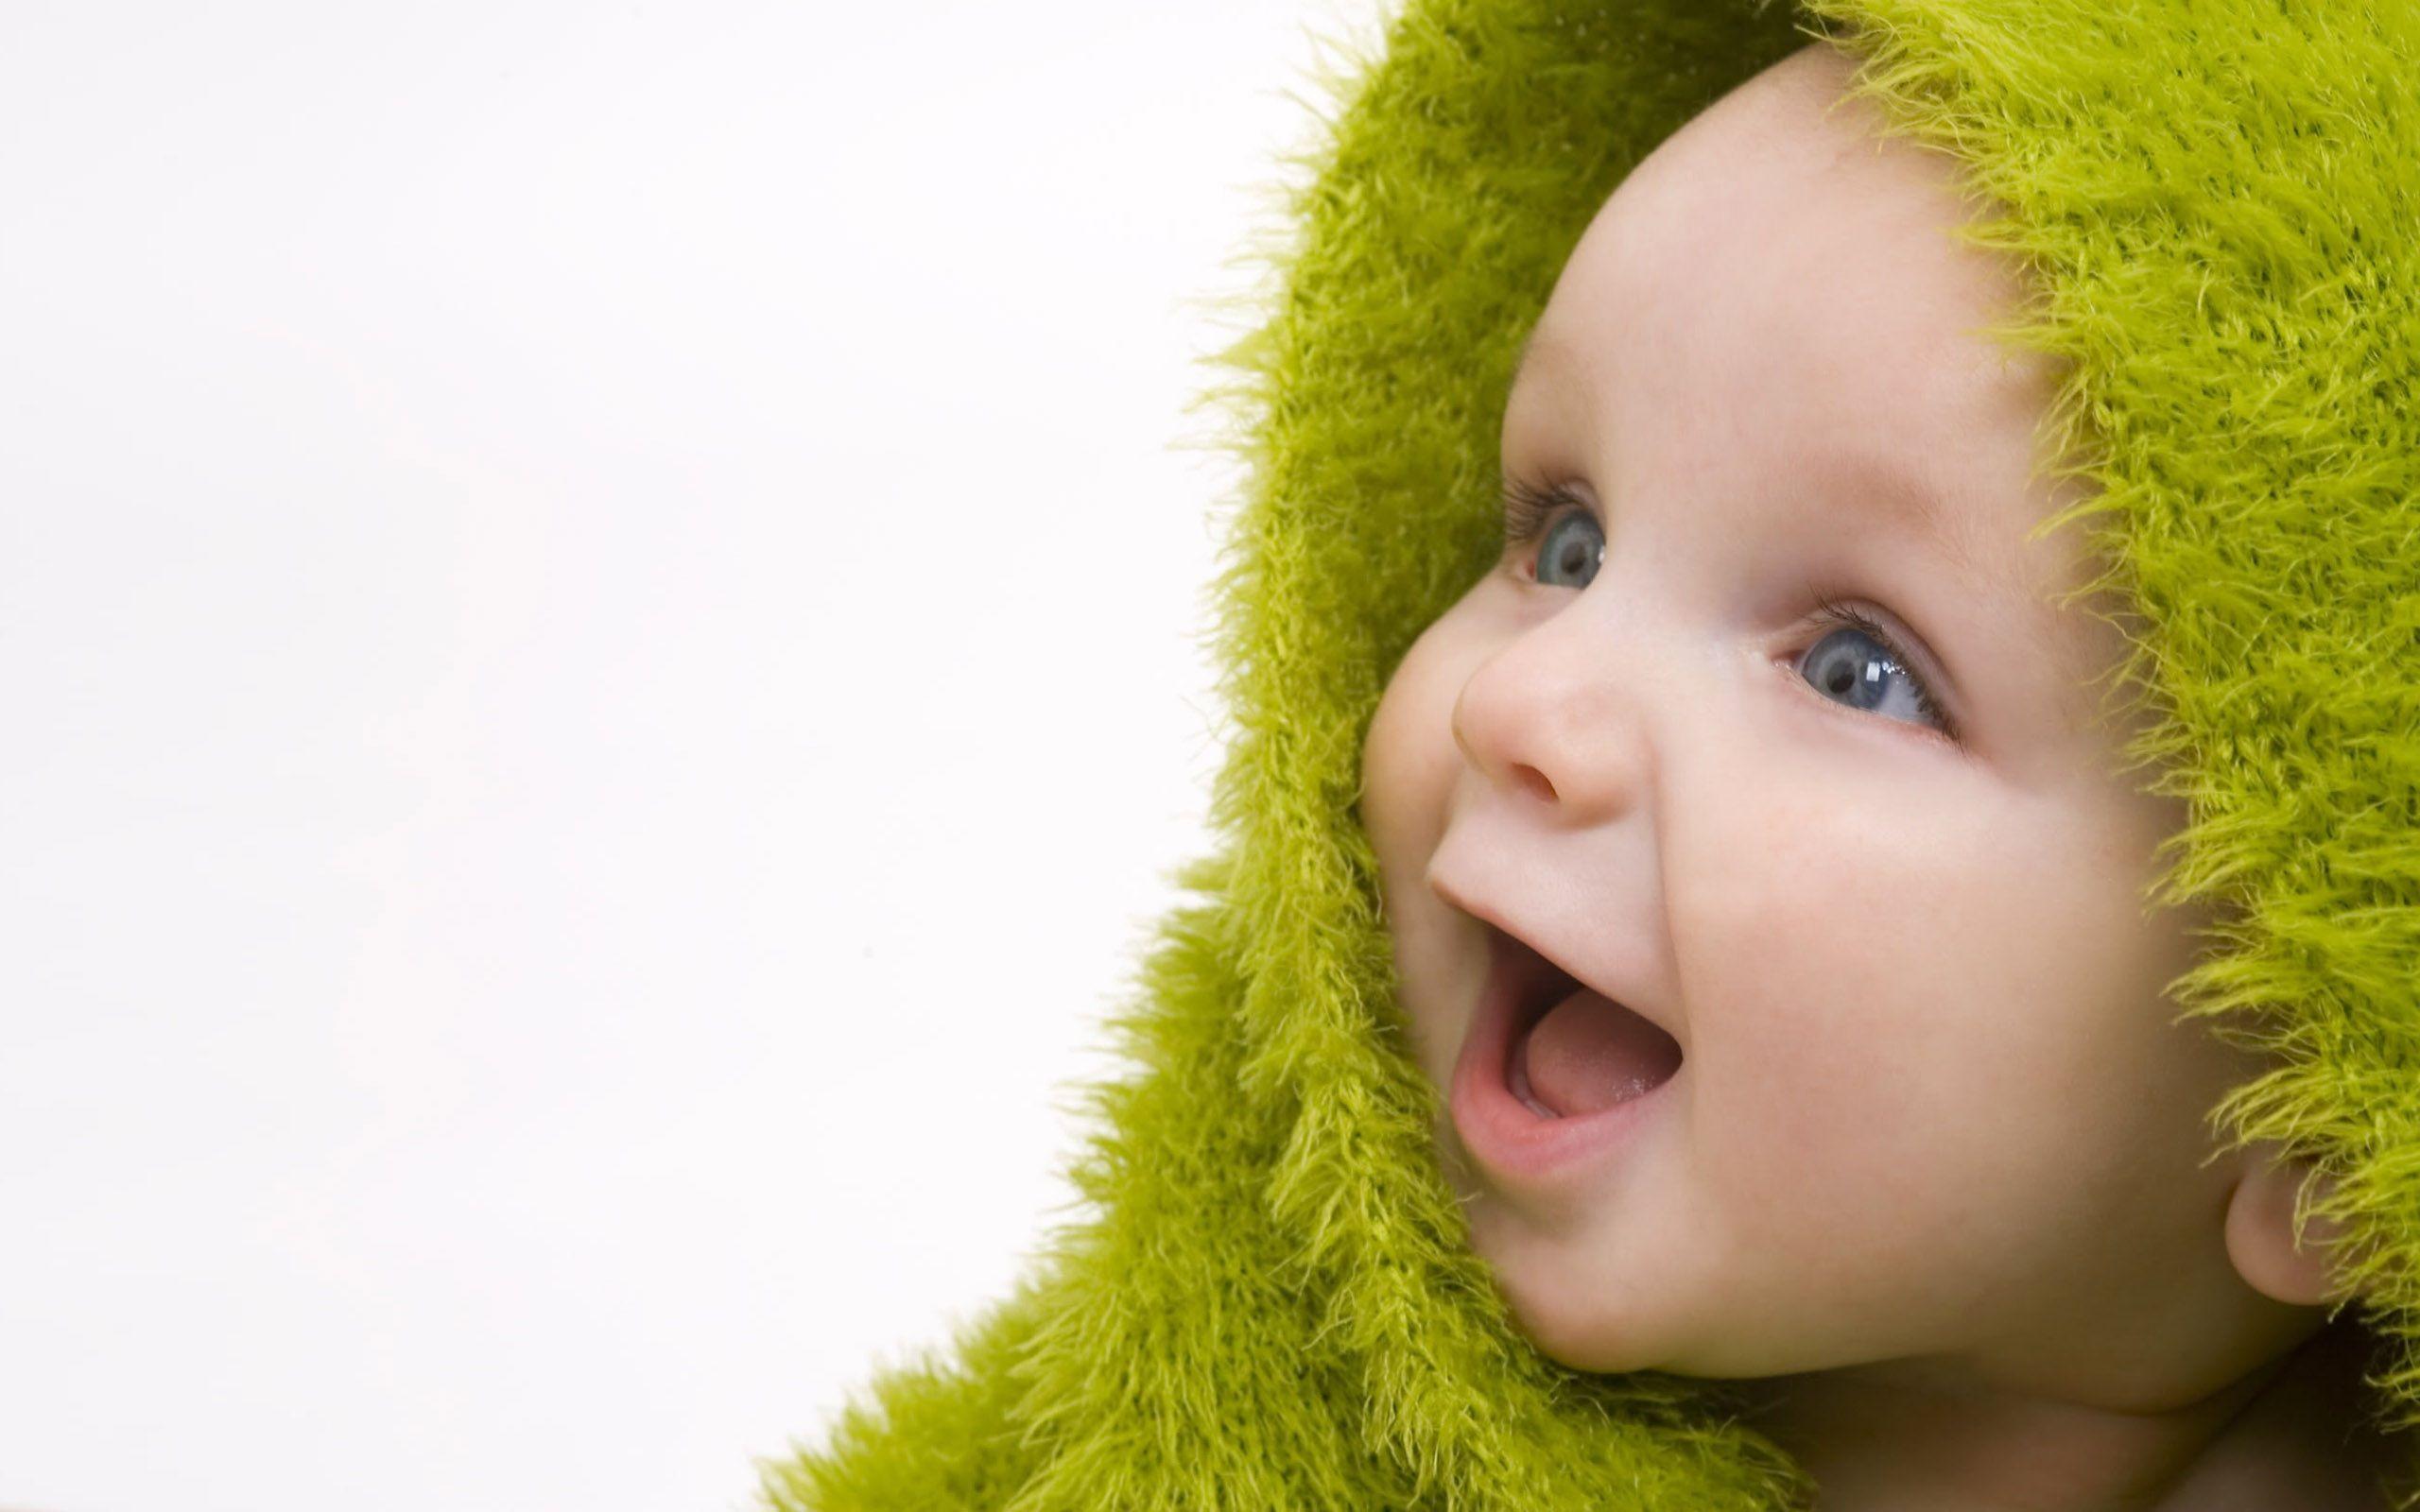 Smiling Cute Babies Wallpaper (62+ images)